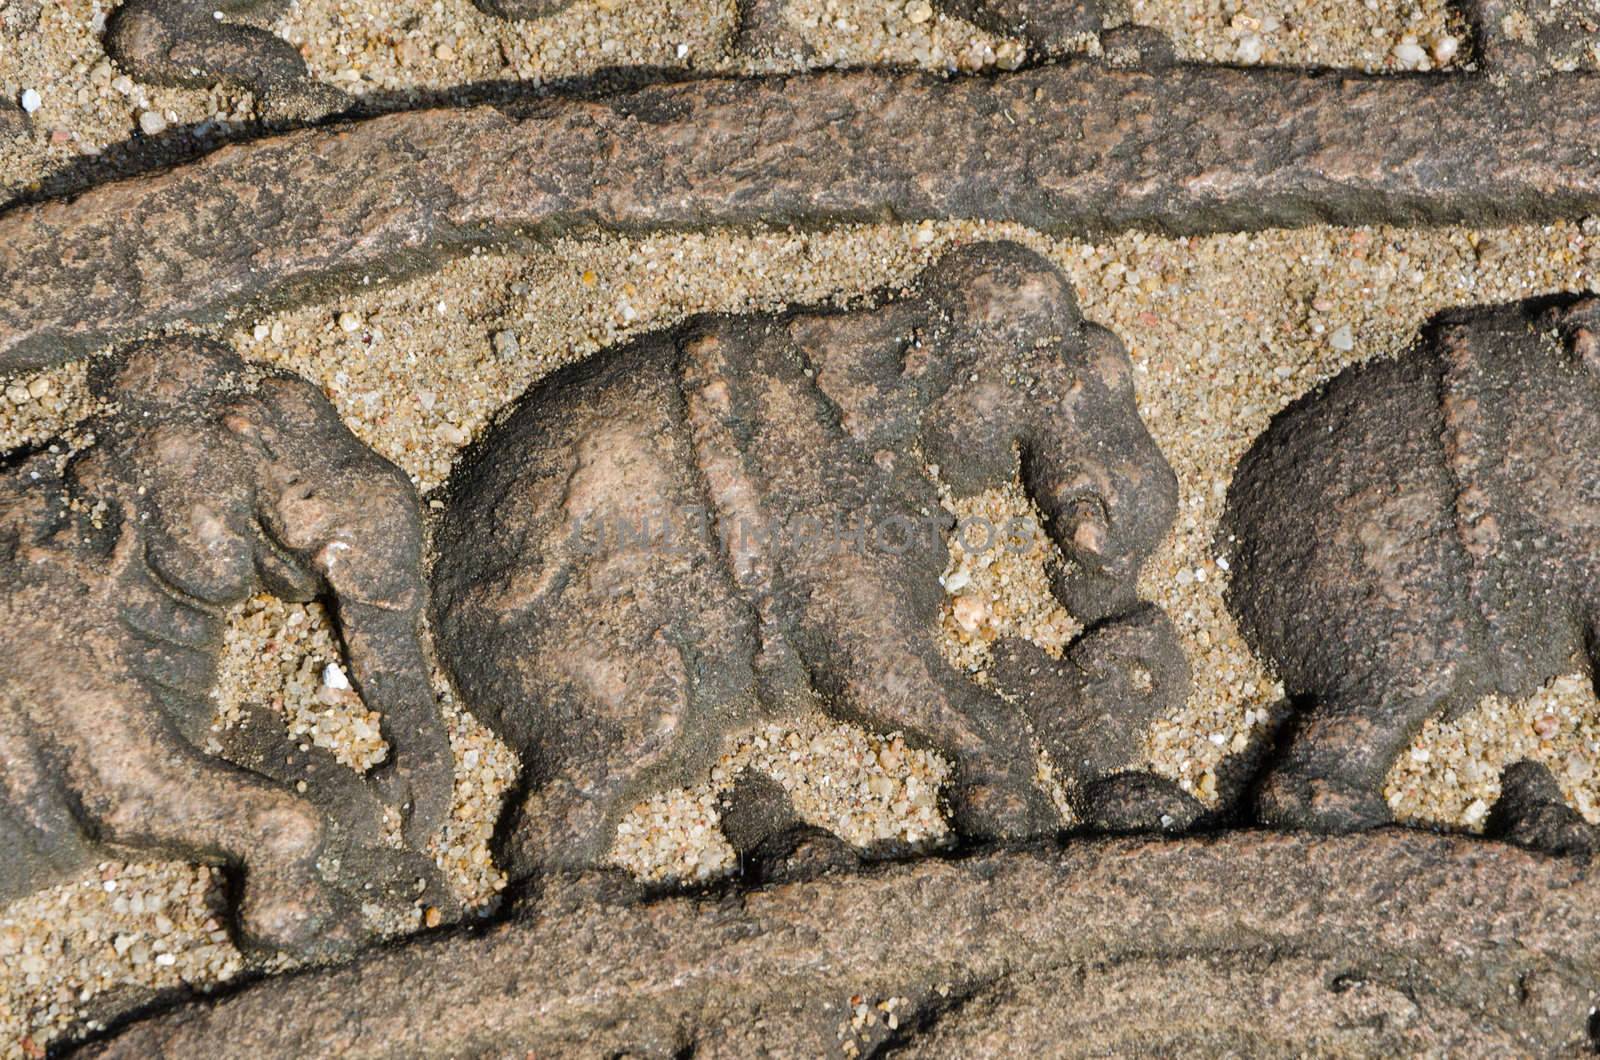 stone decorations on ruins at Polonnaruwa, Sri Lanka.